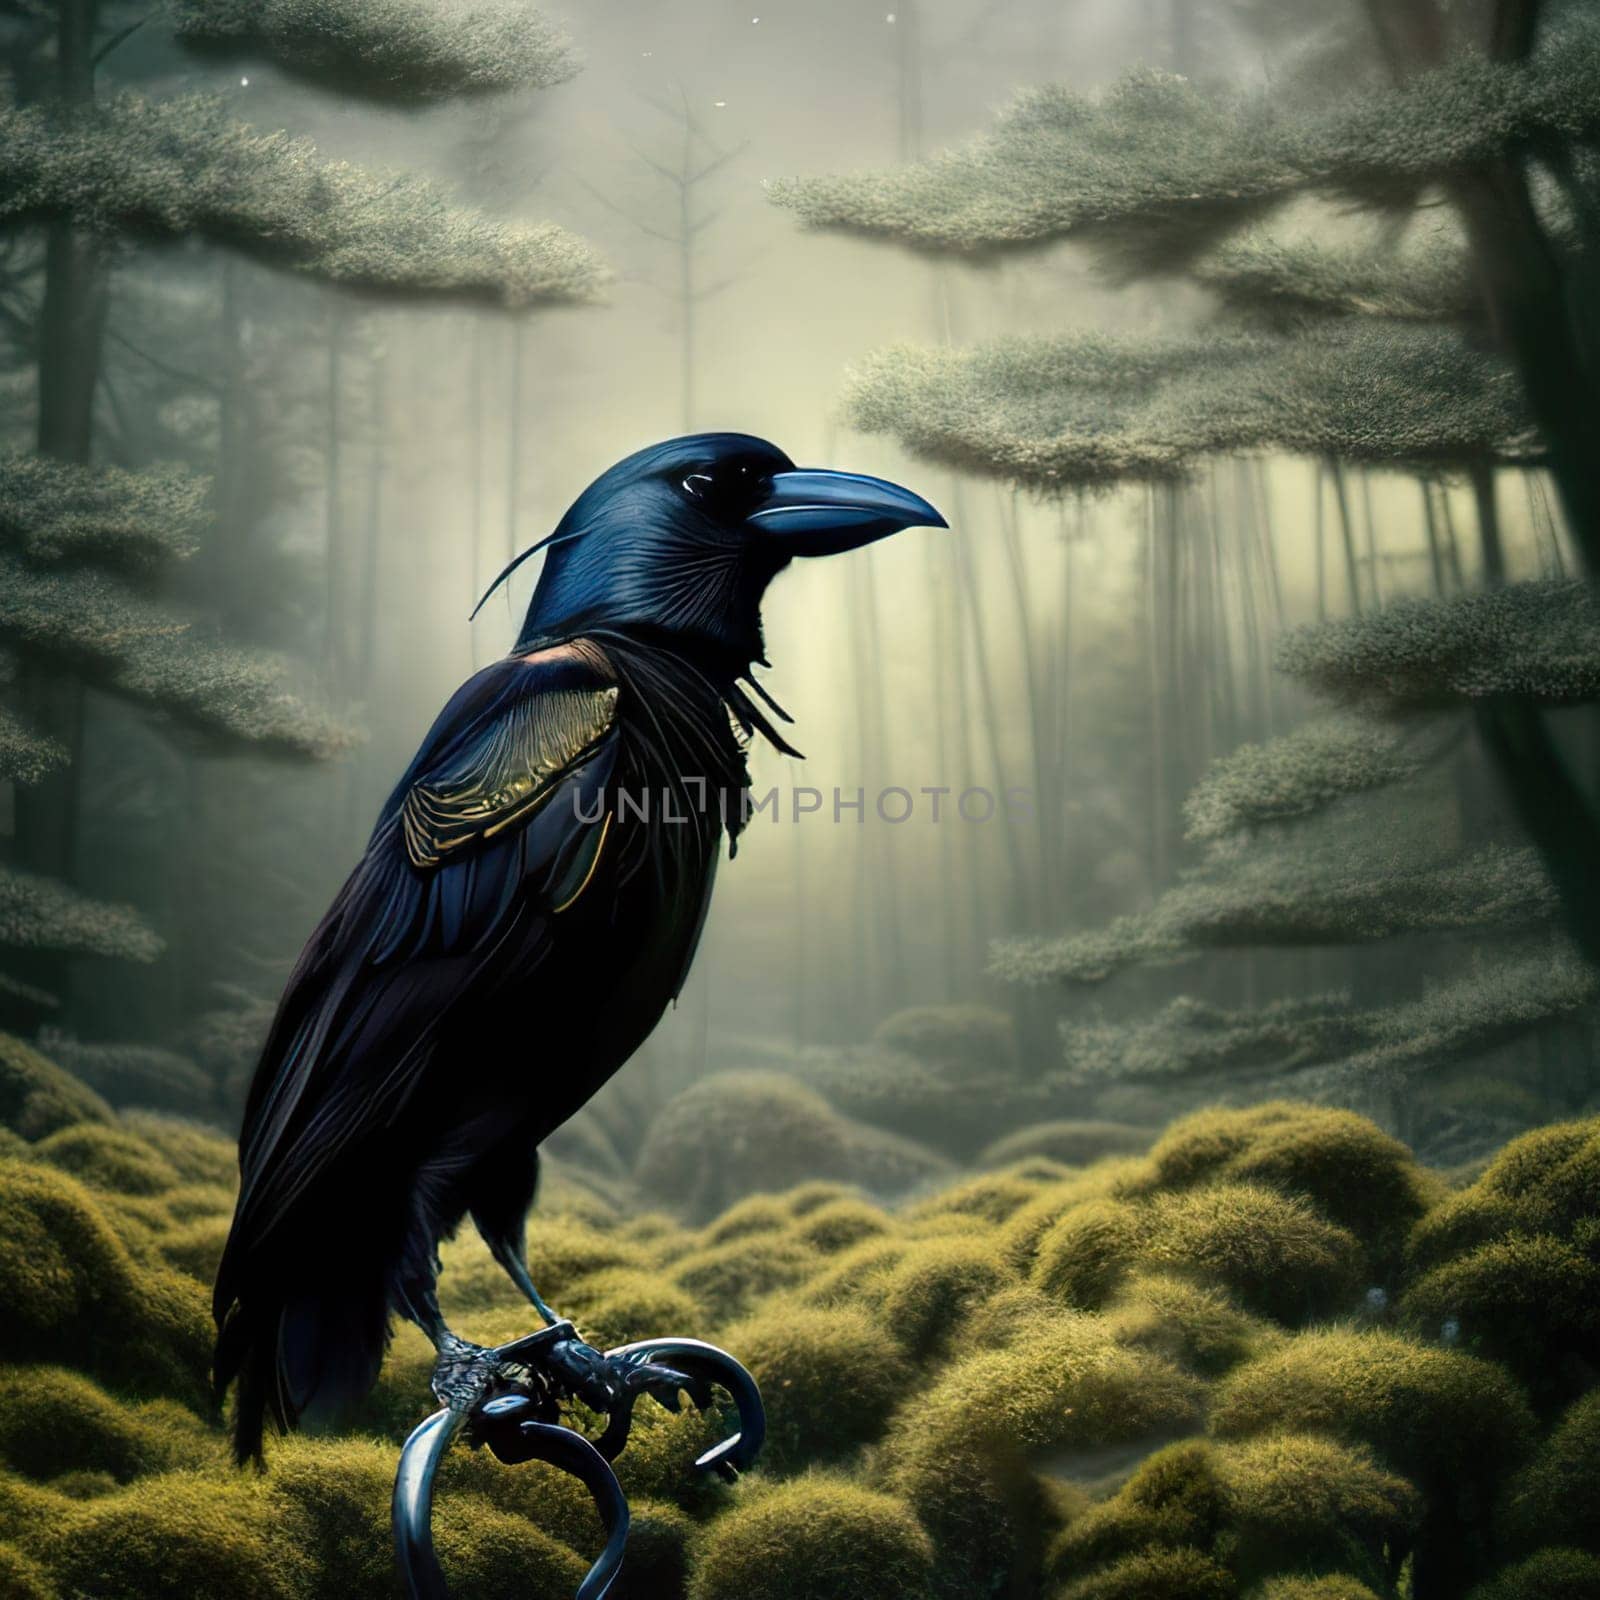 Creepy black crow croaking in misty dark forest on full moon night